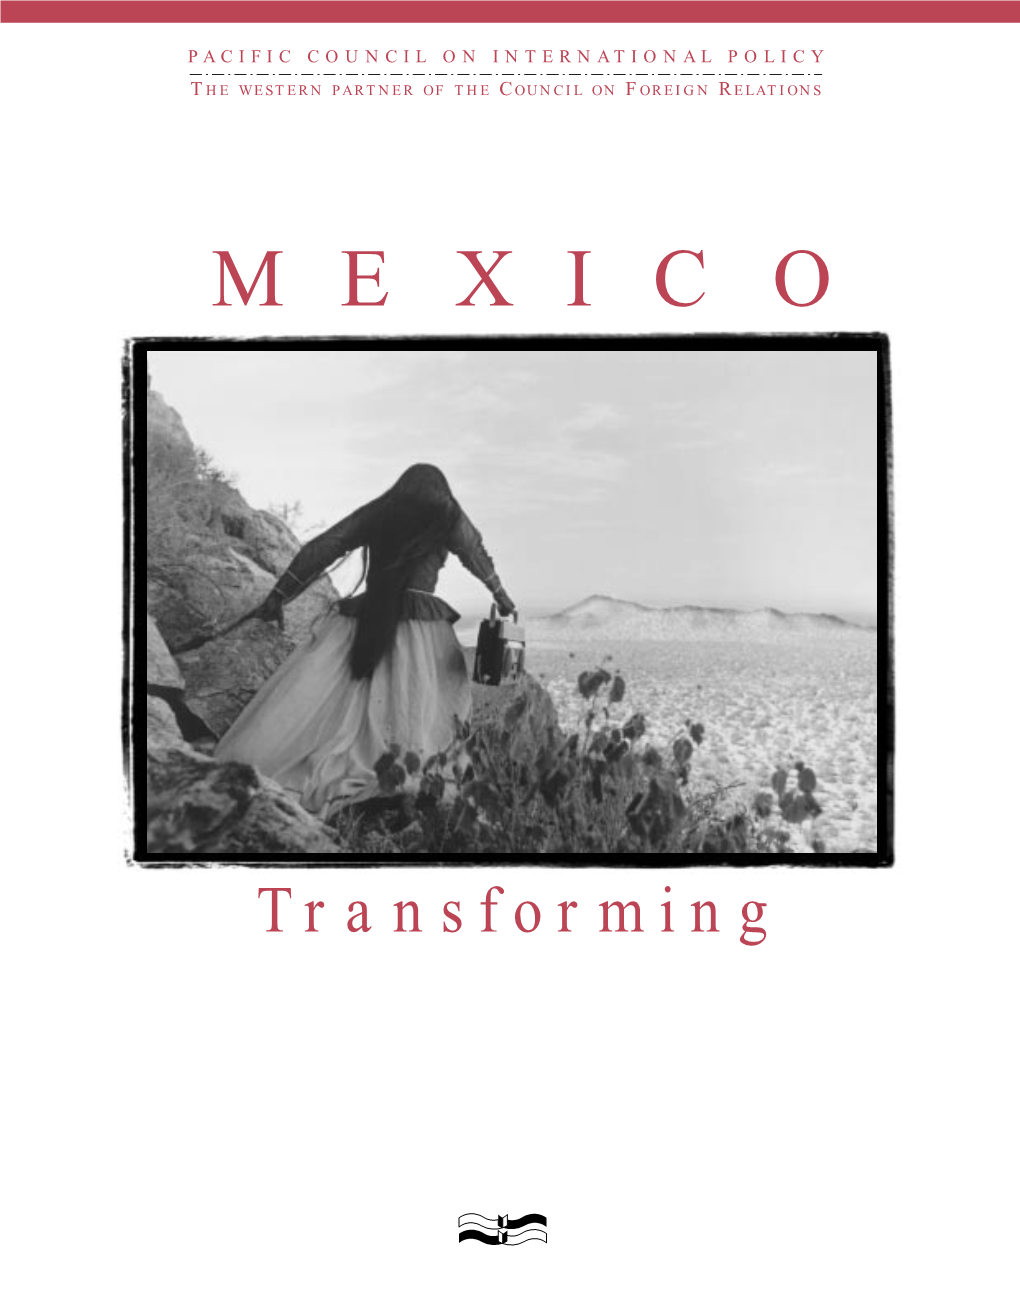 MEXICO Transforming